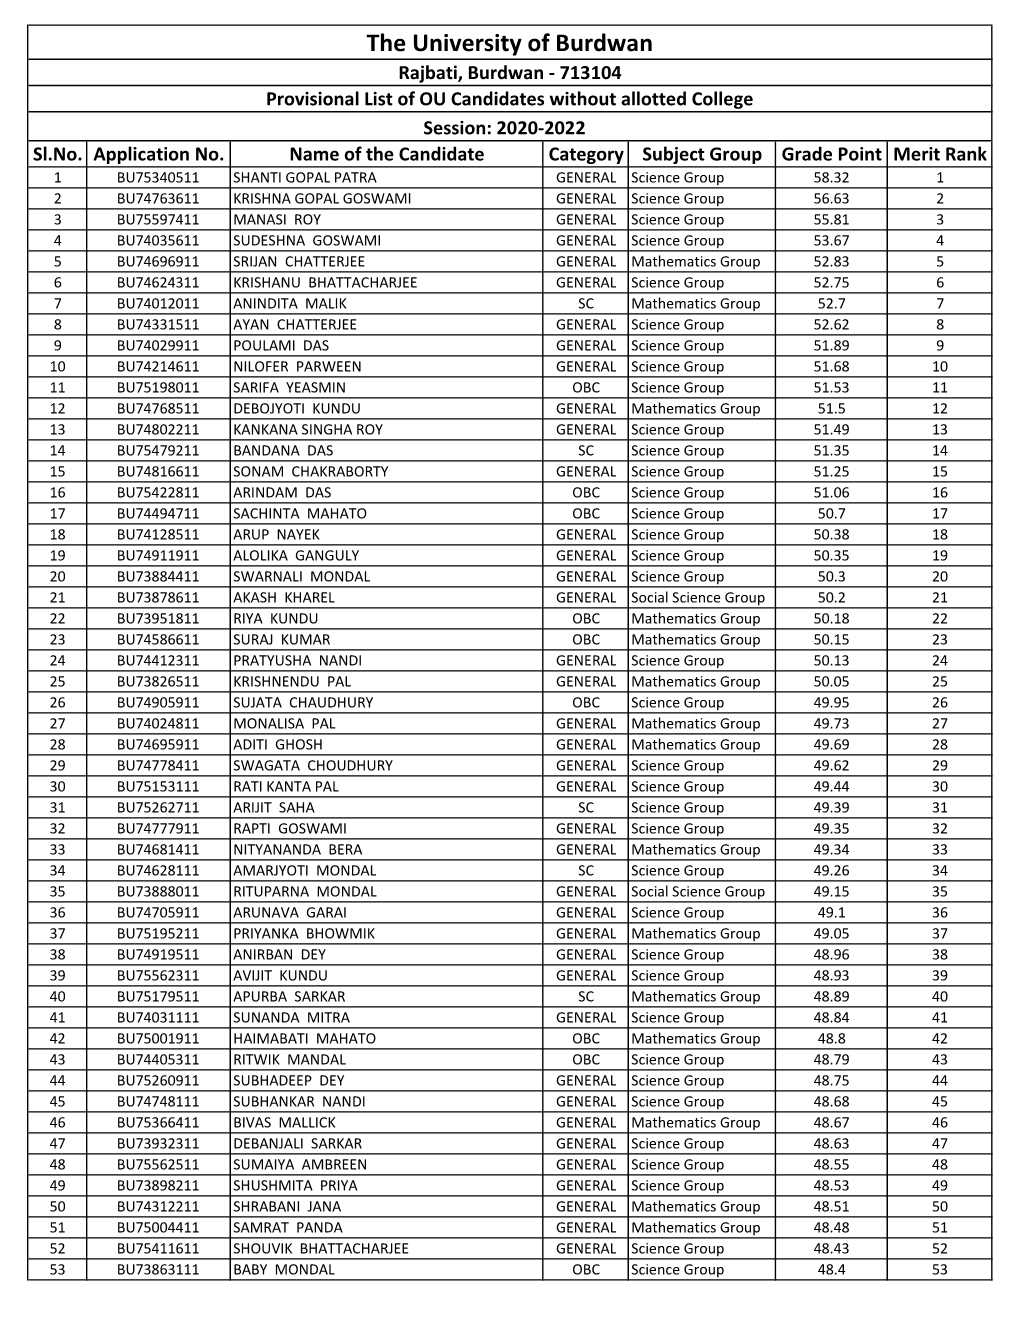 Provisional Rank List of OU (Round-1) 2020-22 08.04.21